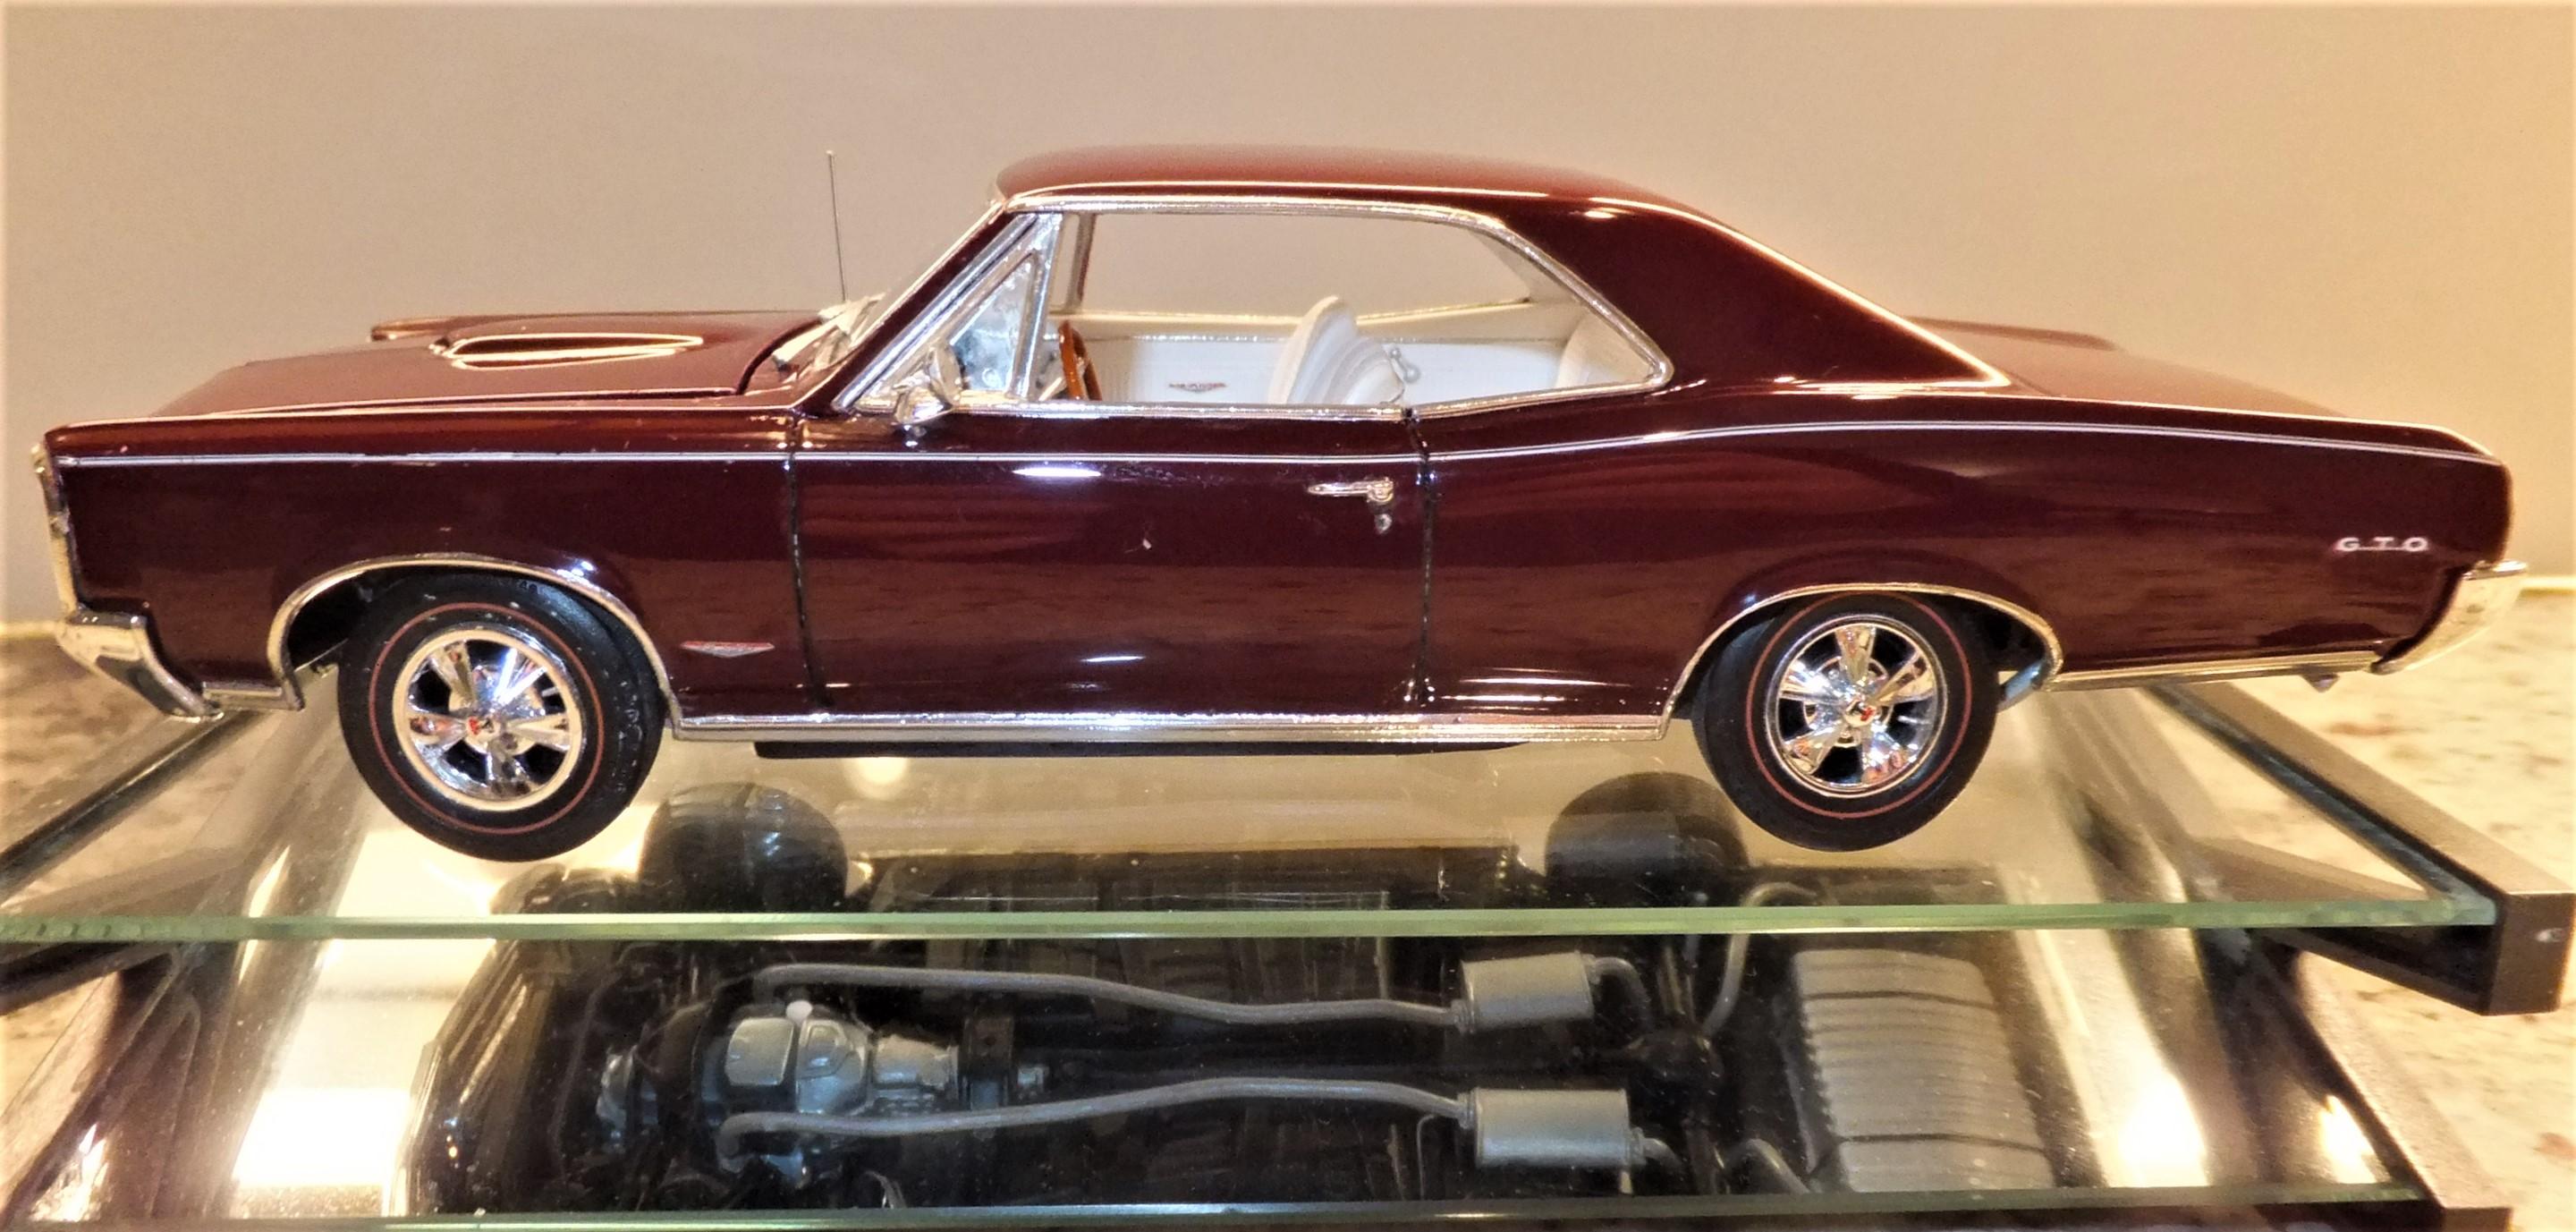 2021 Model Pontiac of Model - Forum Cars Build Final 1966 - GTO - Cars Magazine Revell